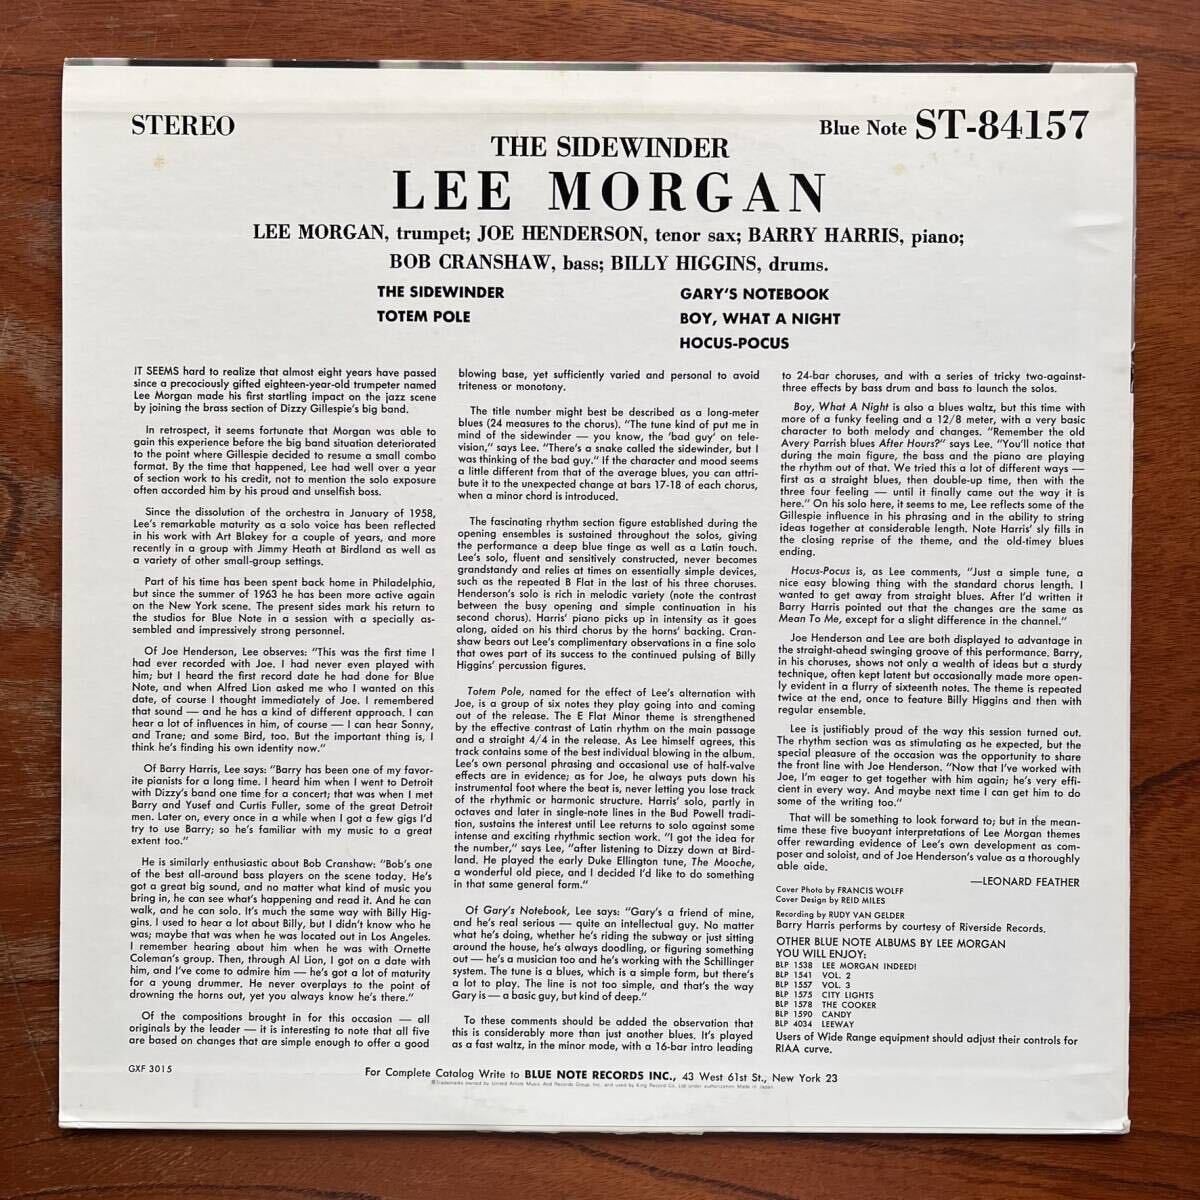 【BLUE NOTE キング盤 ブルーノート】LEE MORGAN『THE SIDEWINDER』リー・モーガン/ジョー・ヘンダーソン/JOE HENDERSON/BARRY HARRIS_画像2